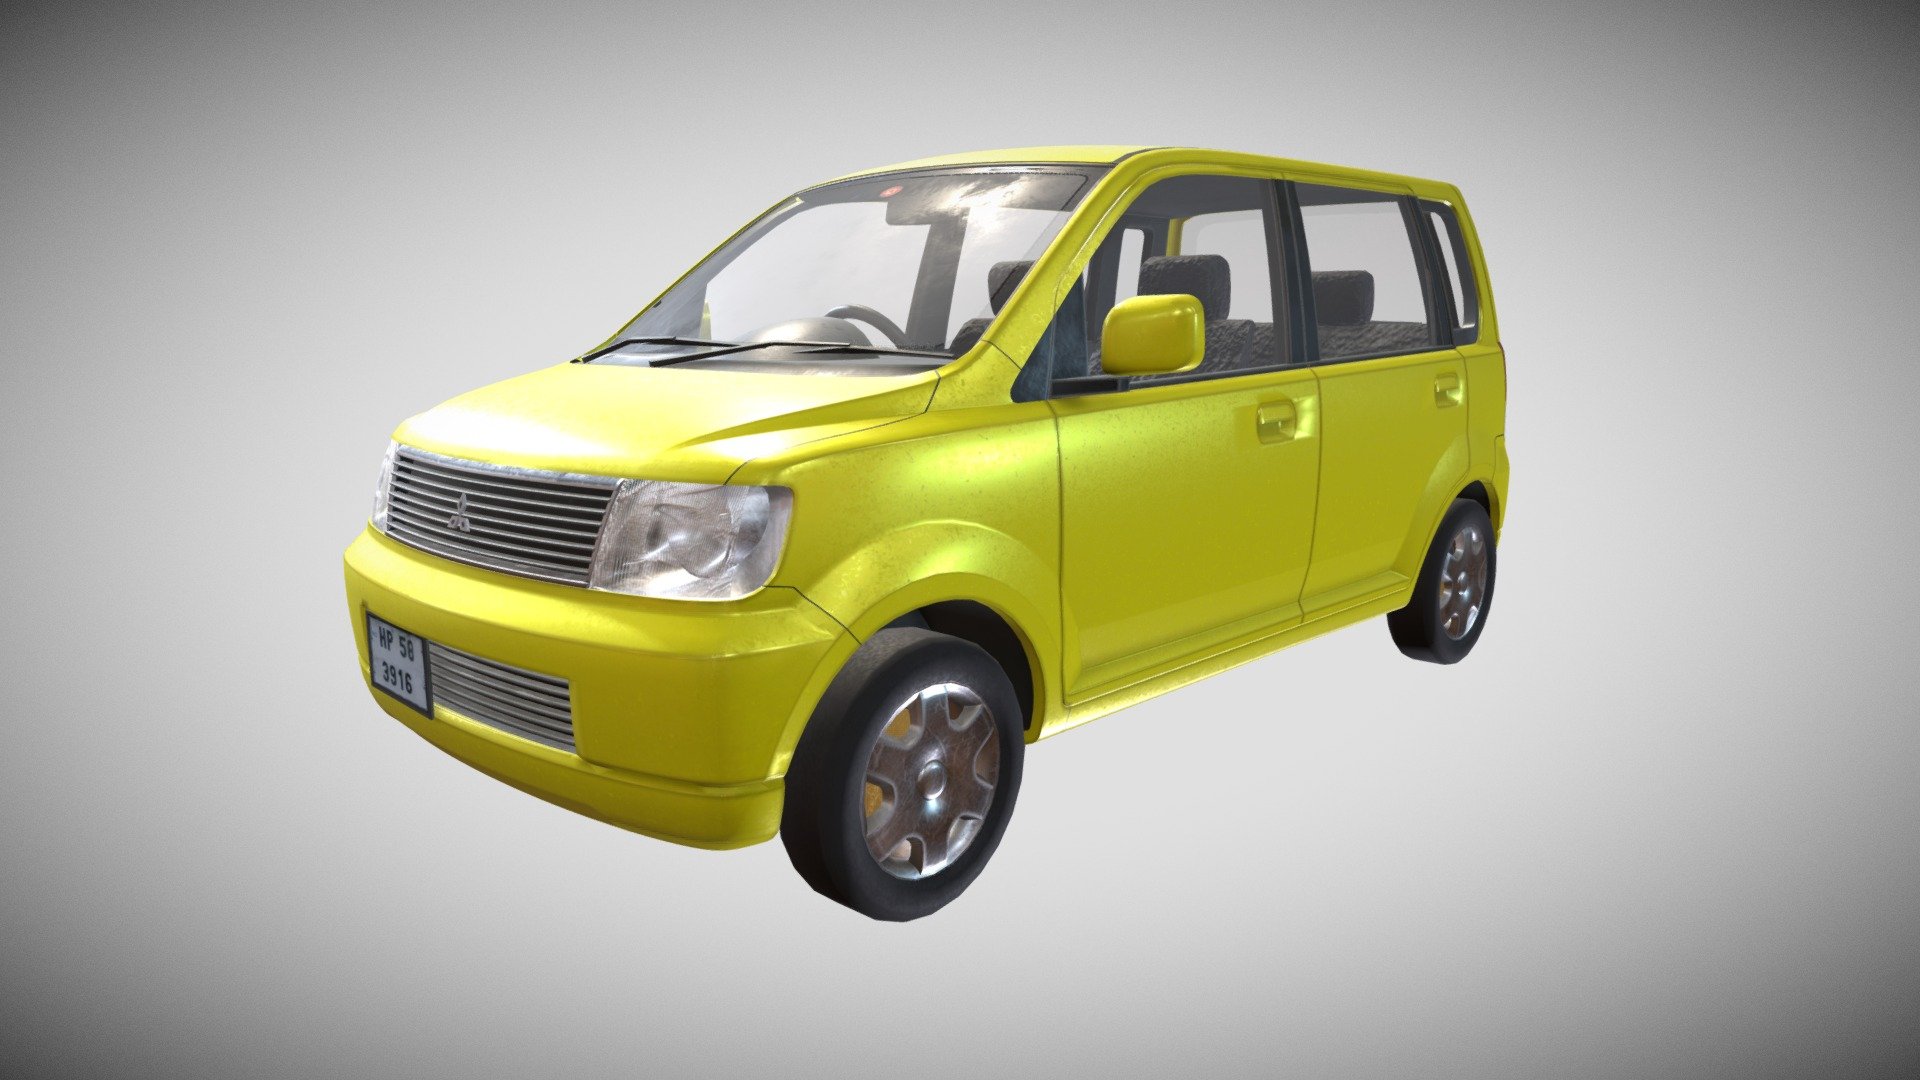 Suzuki Car - One Material